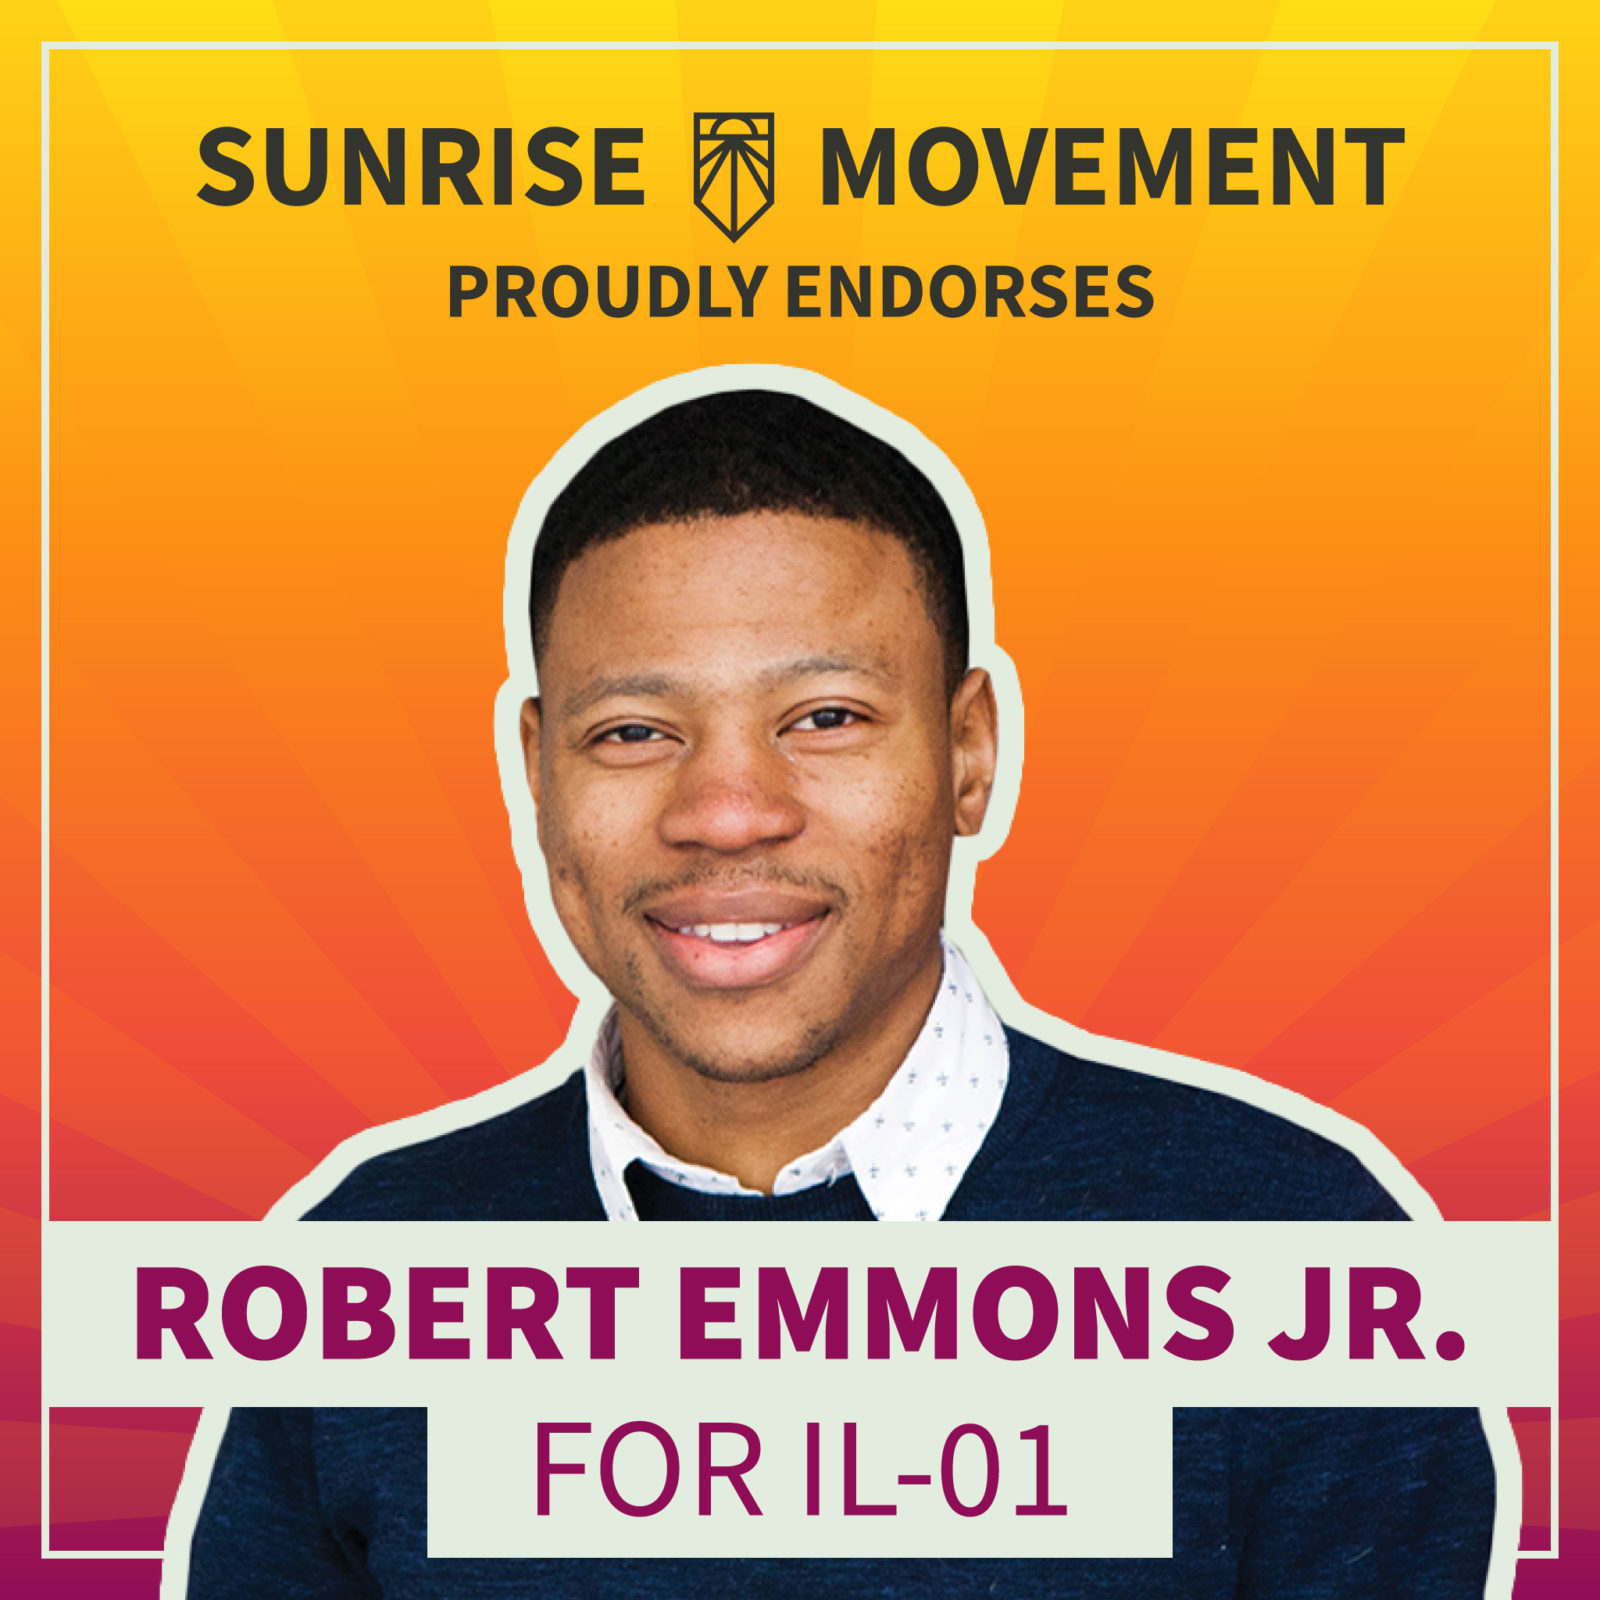 Una foto de Robert Emmons Jr con texto: Sunrise Movement respalda con orgullo a Robert Emmons Jr para IL-01